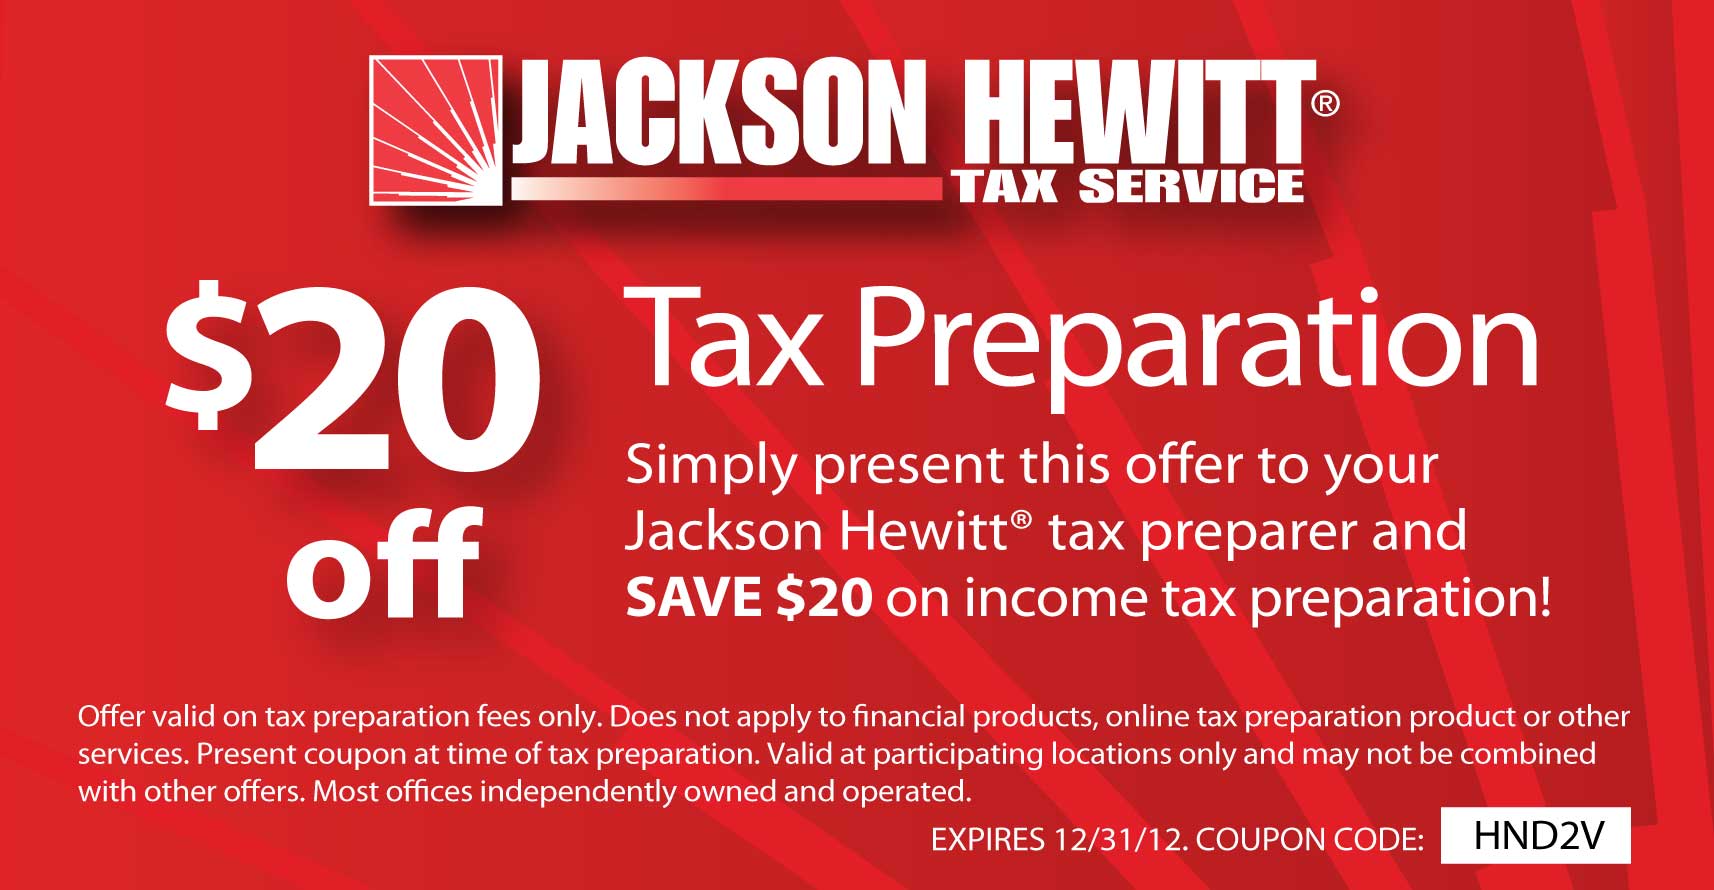 Jackson Hewitt: $20 off Printable Coupon